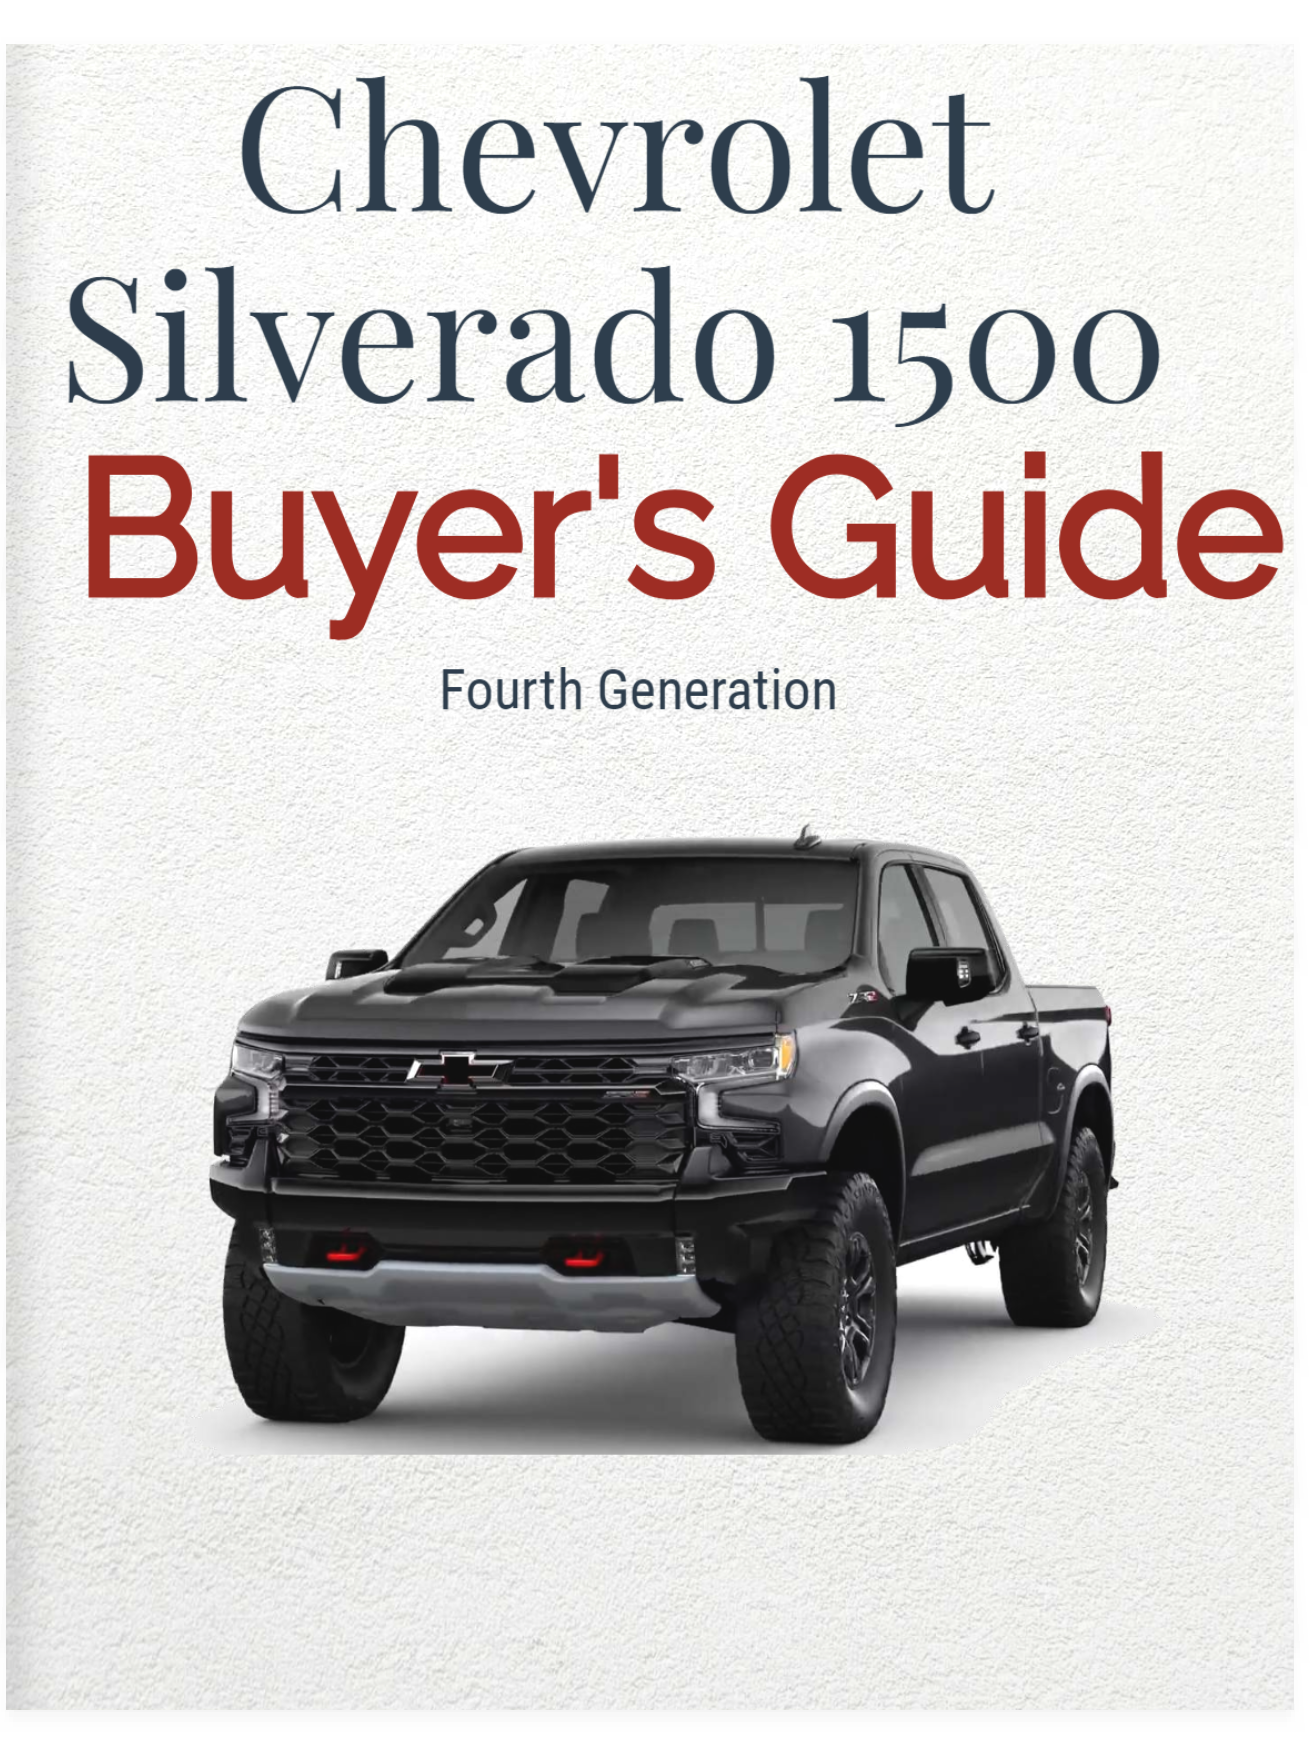 Chevrolet Silverado 1500 Fourth Generation Buyer’s Guide